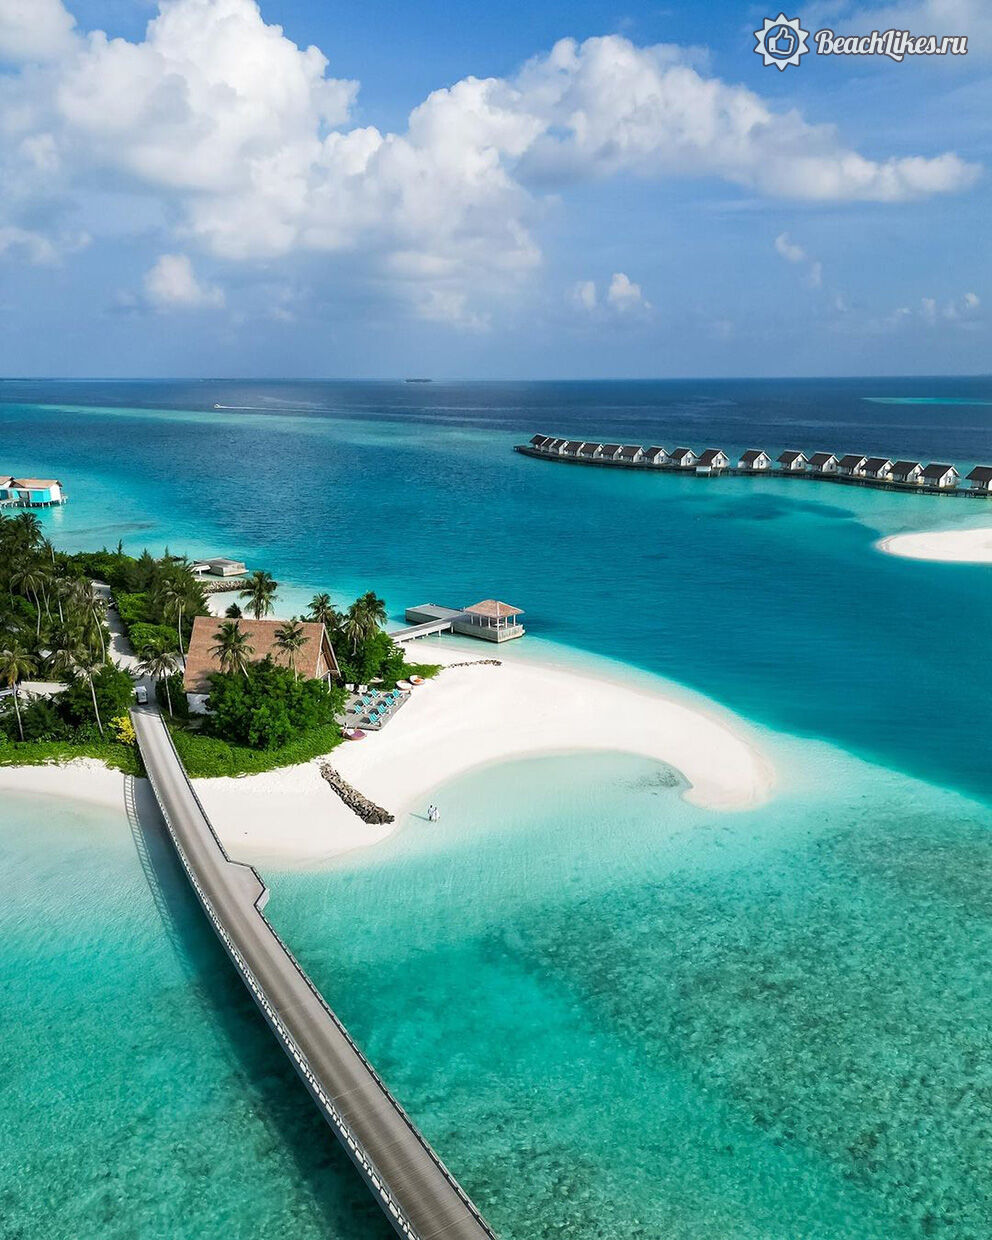 Hard Rock Hotel Maldives фото пляжа